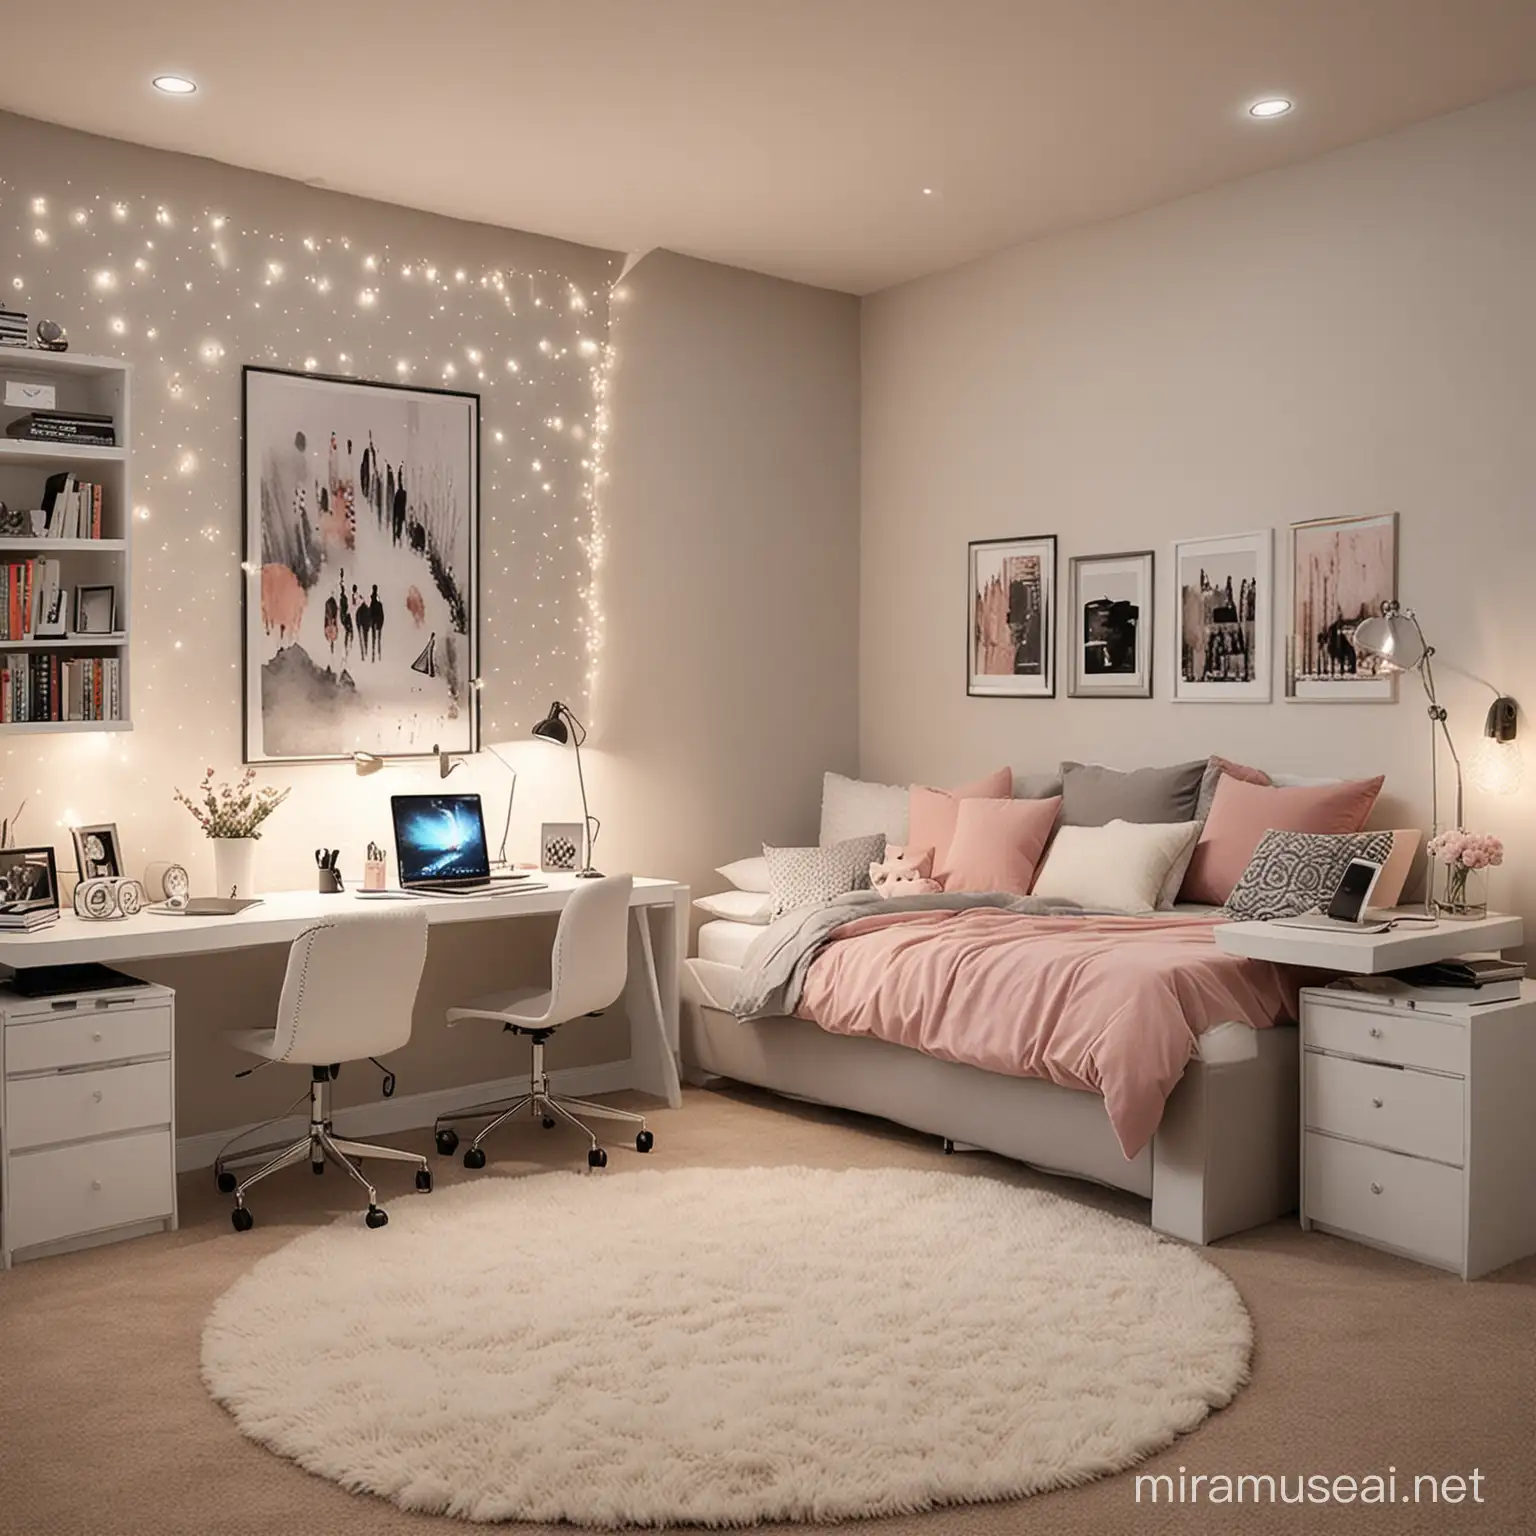 Modern Teen Bedroom with Soft Lighting and Cozy Setup